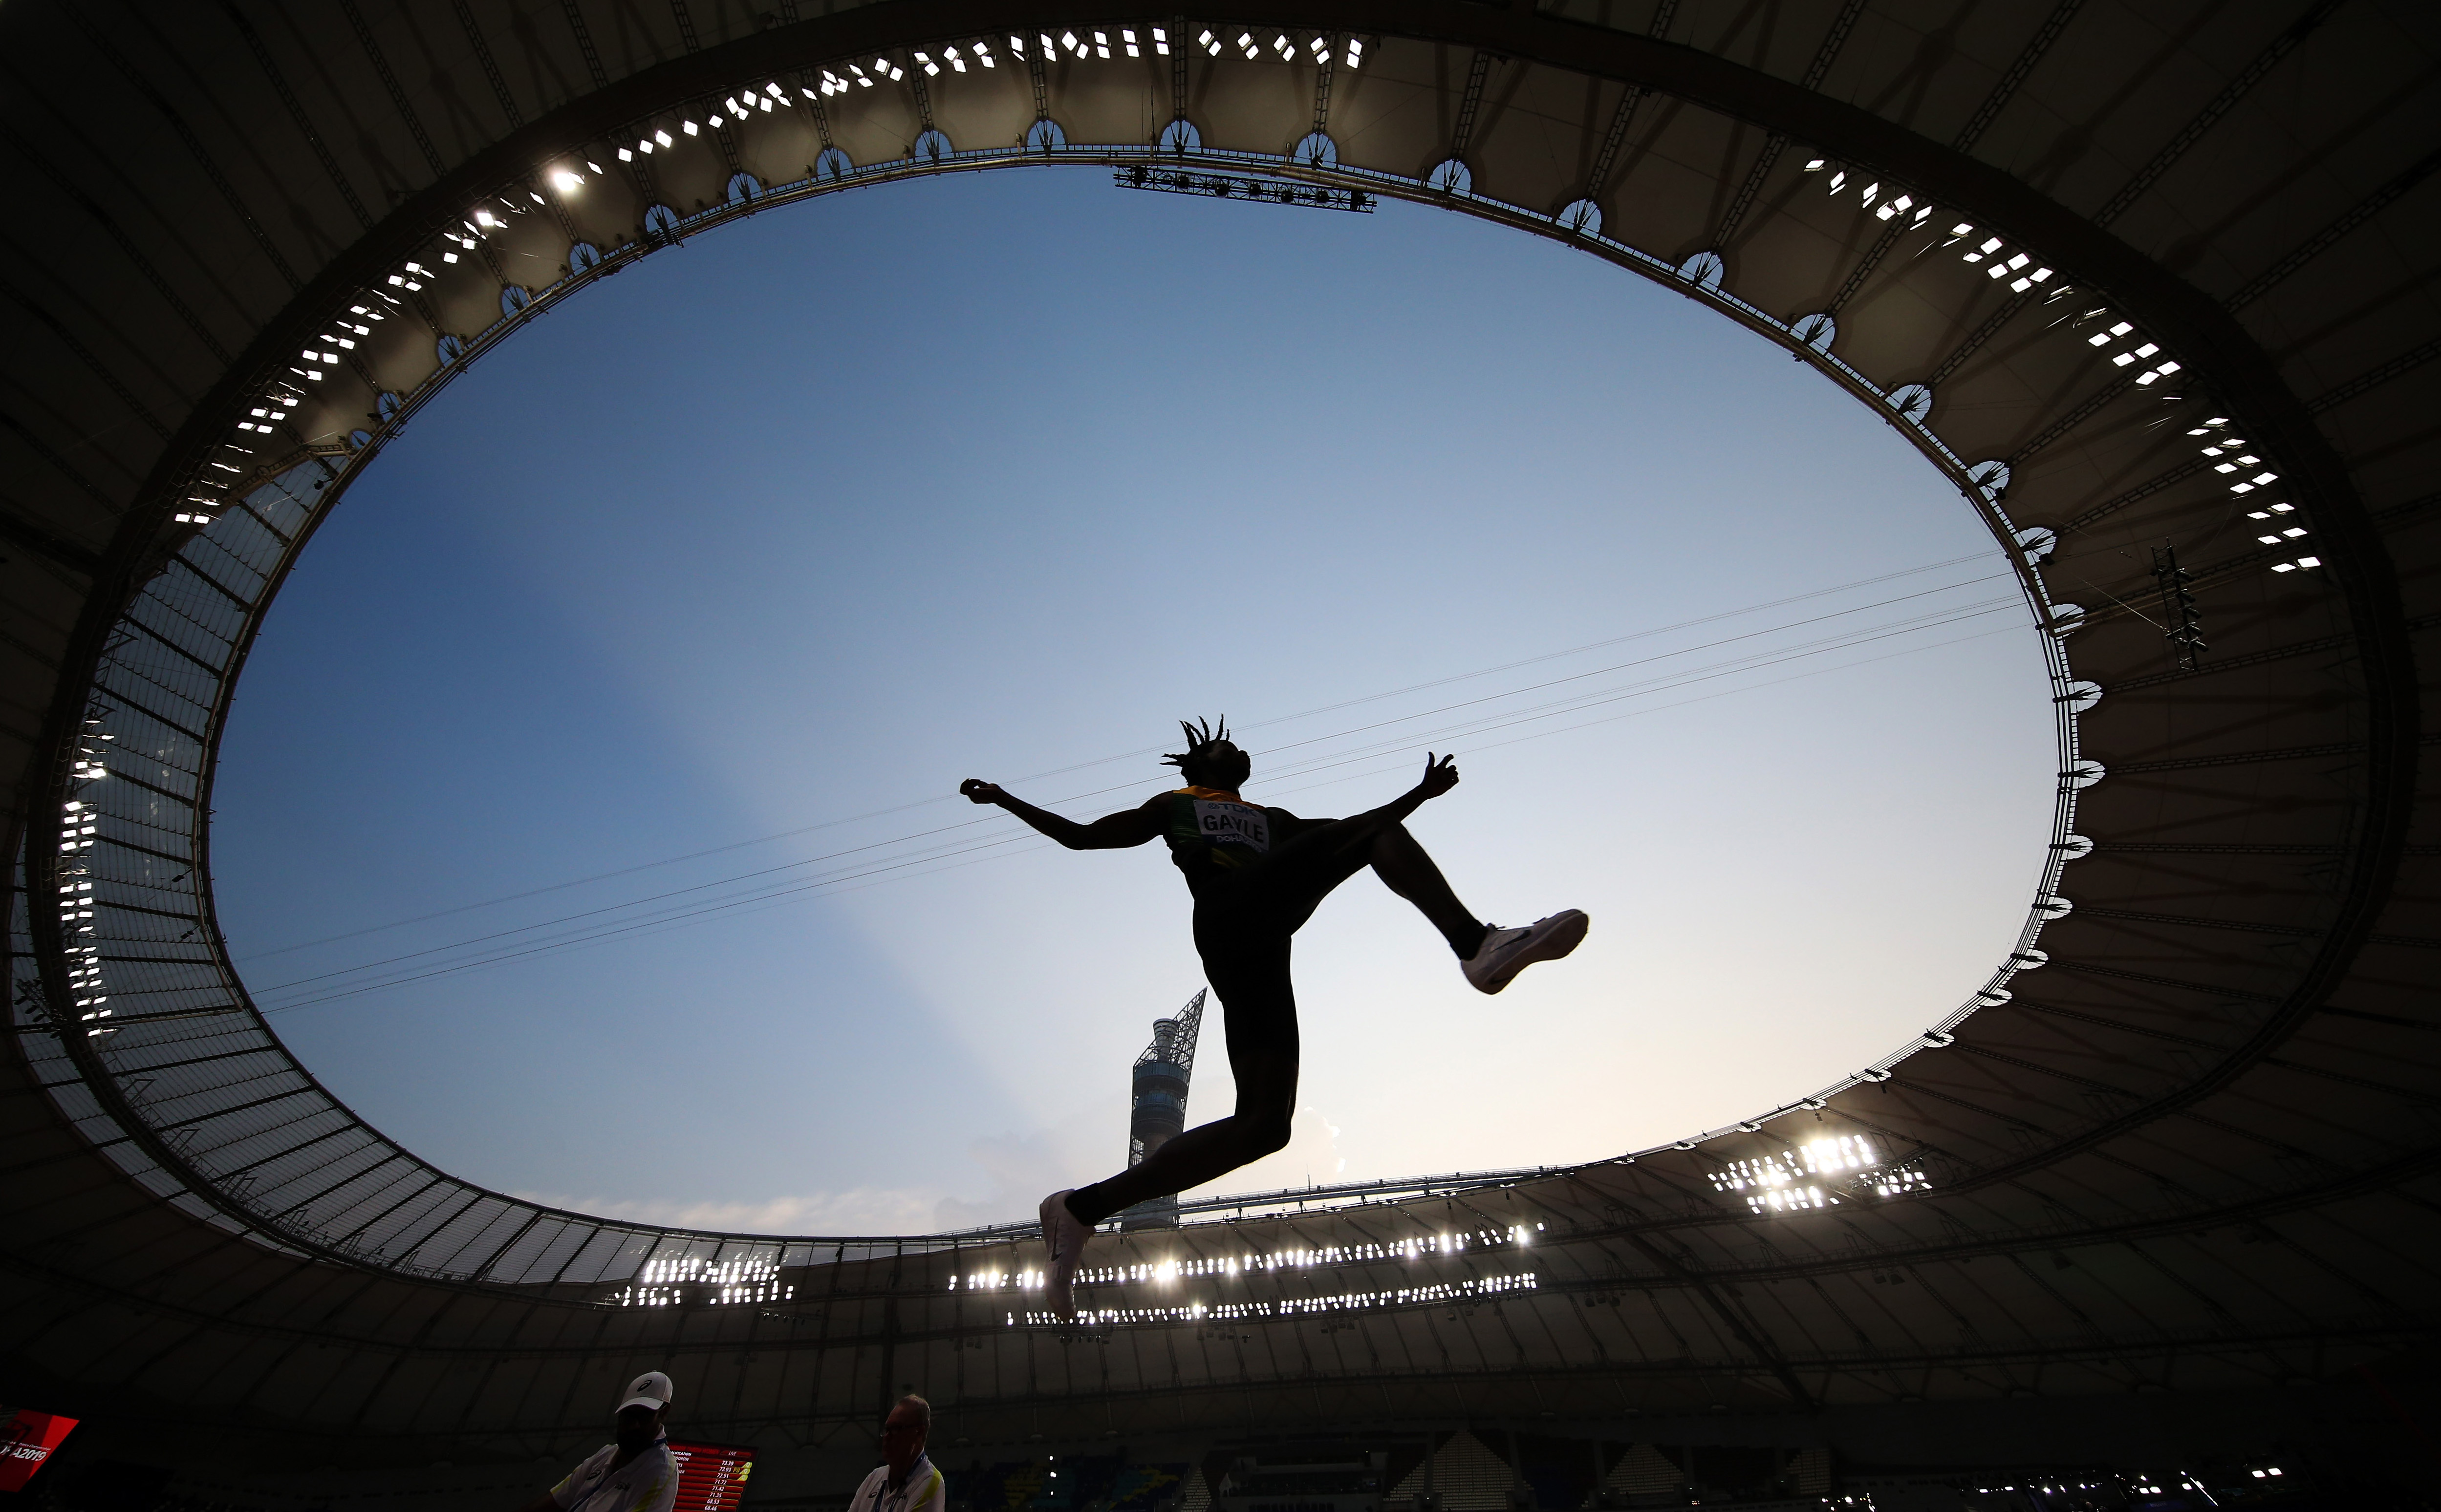 Khalifa International Stadium host the Doha 2019 World Athletics Championships